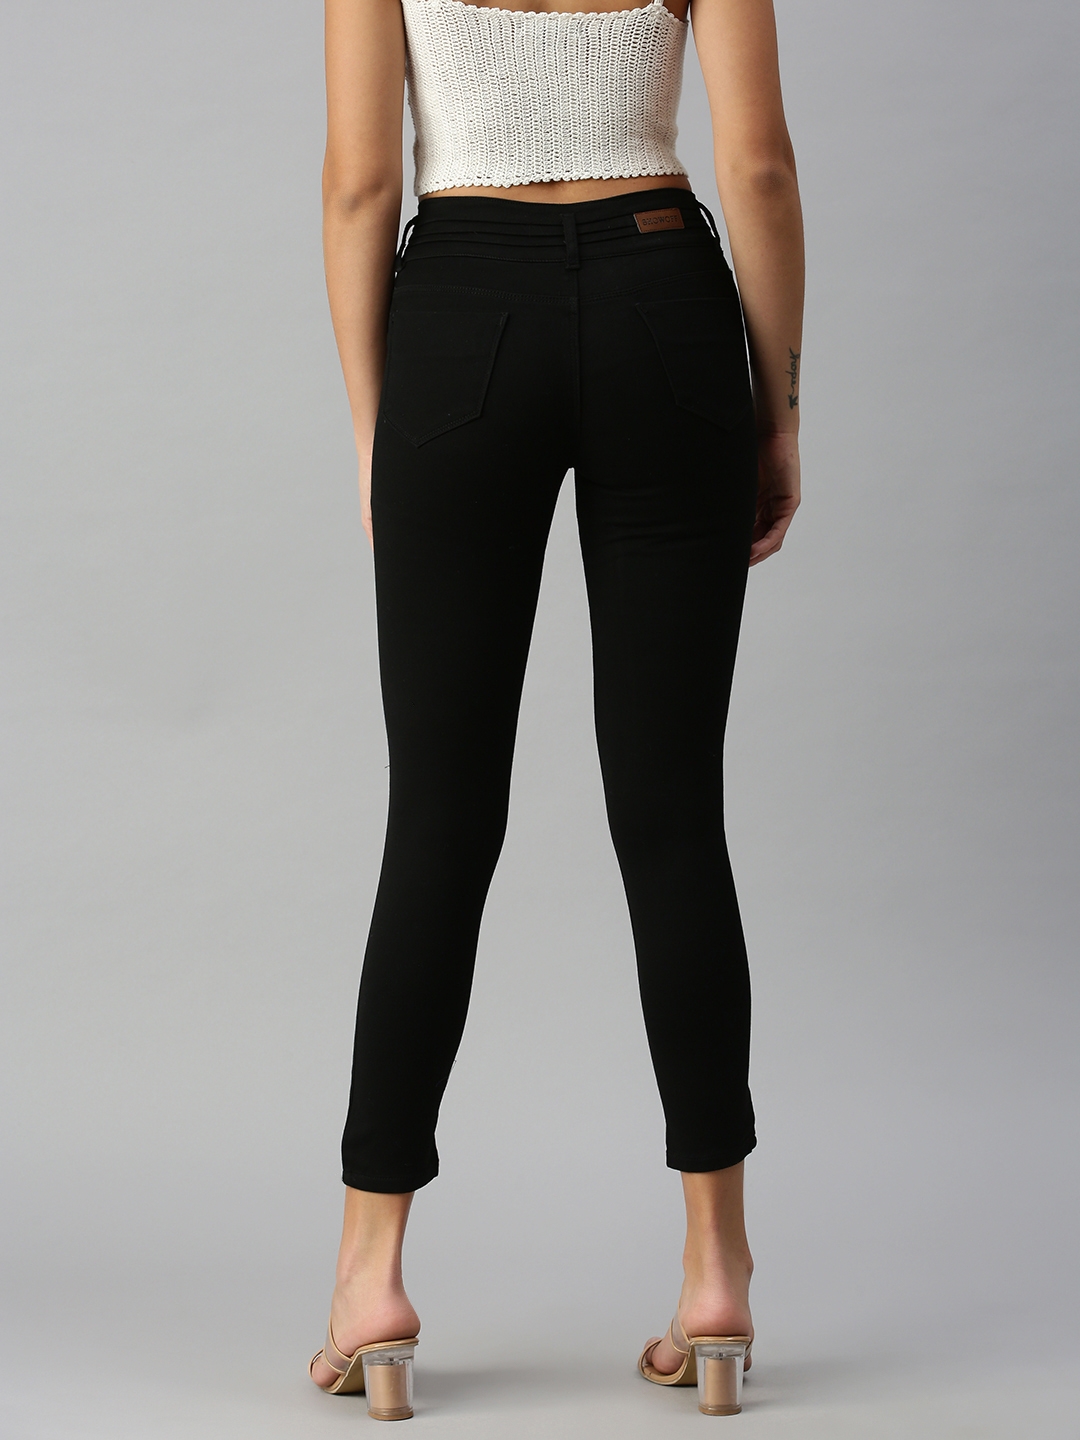 Showoff | SHOWOFF Women's Skinny Fit Clean Look Black Jeans 2